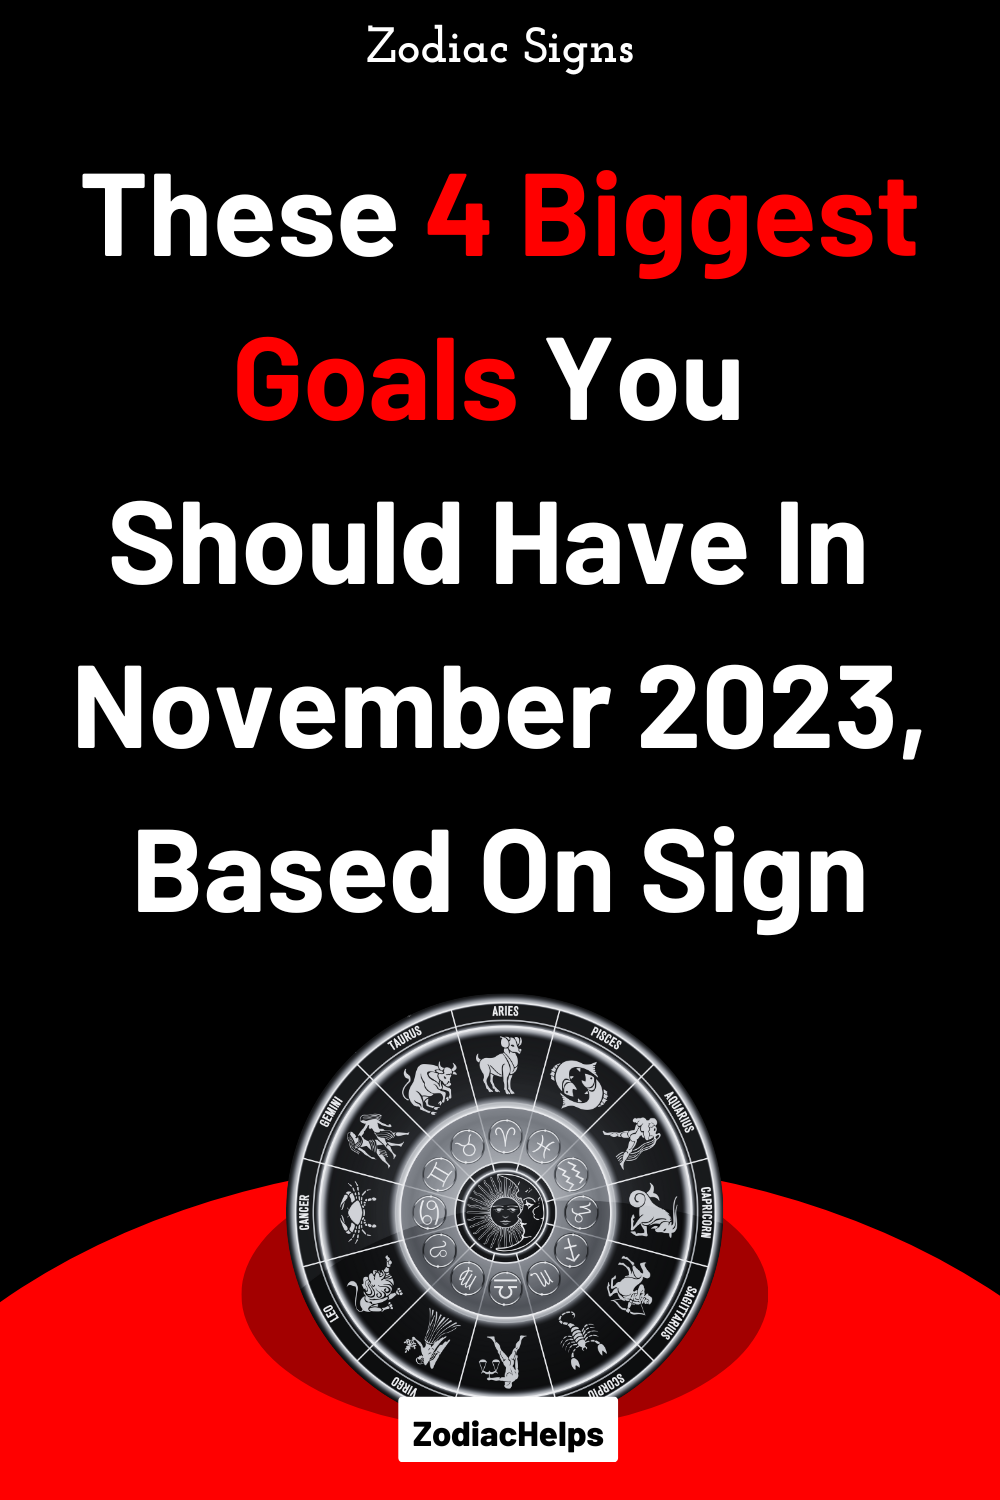 These 4 Biggest Goals You Should Have In November 2023, Based On Sign